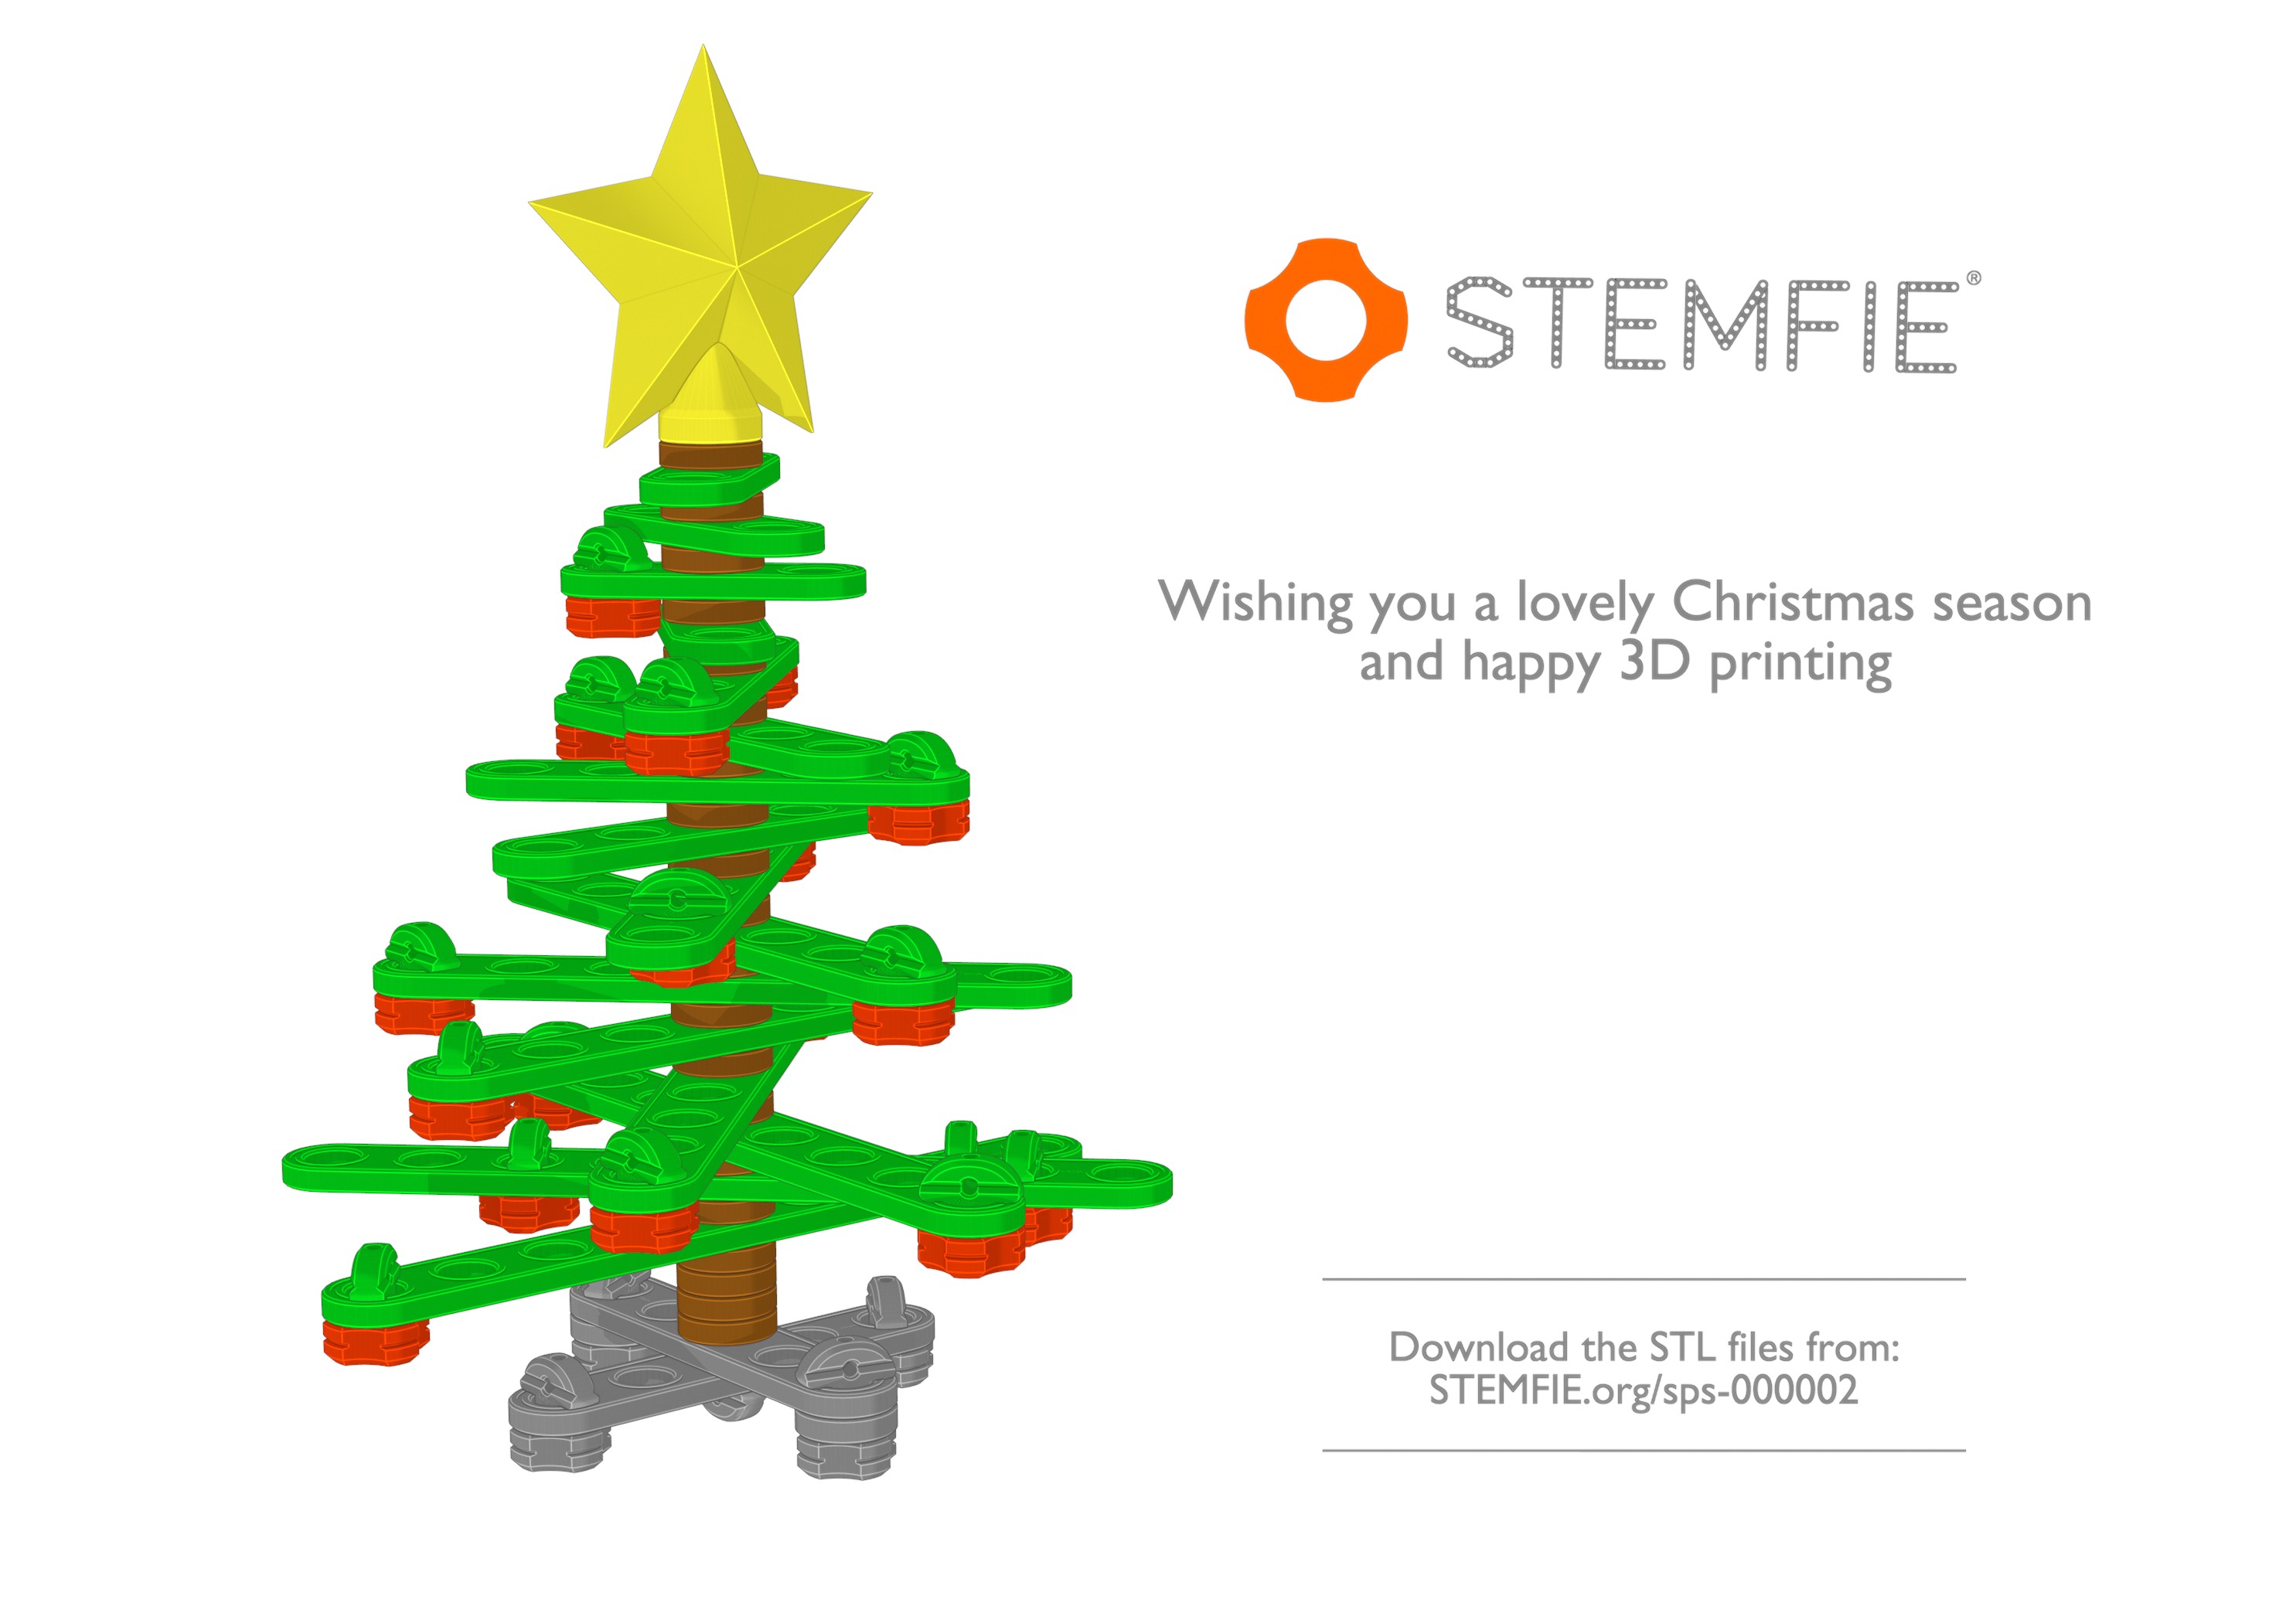 STEMFIE Desktop Christmas Tree